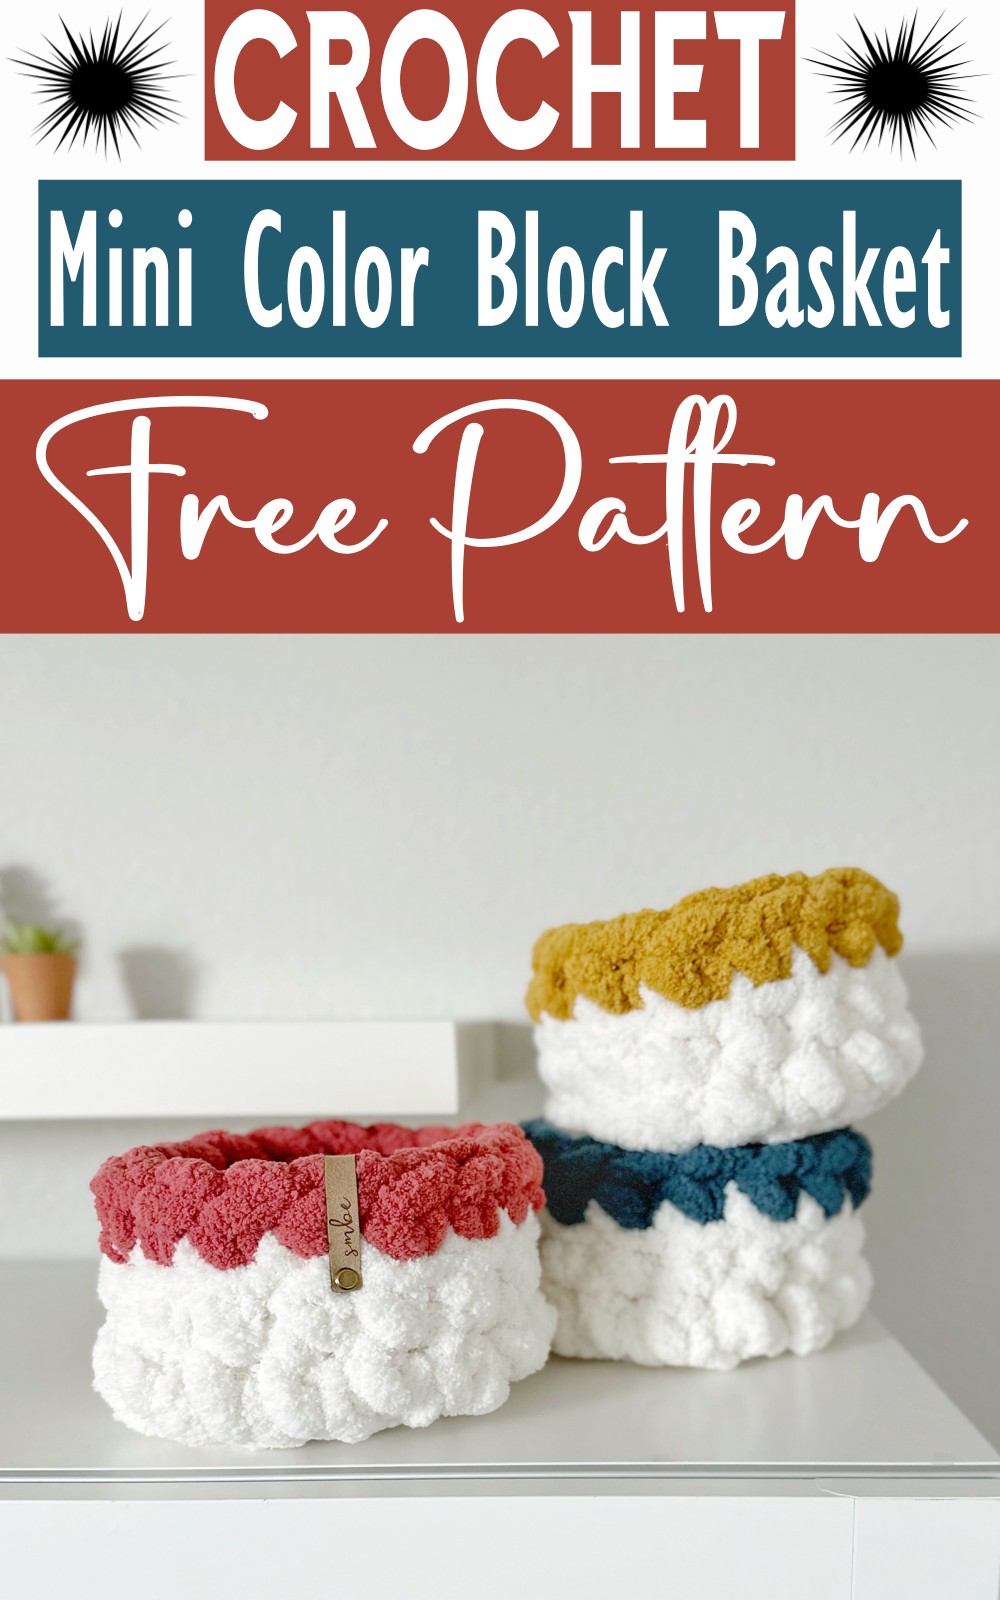 Mini Crochet Color Block Basket